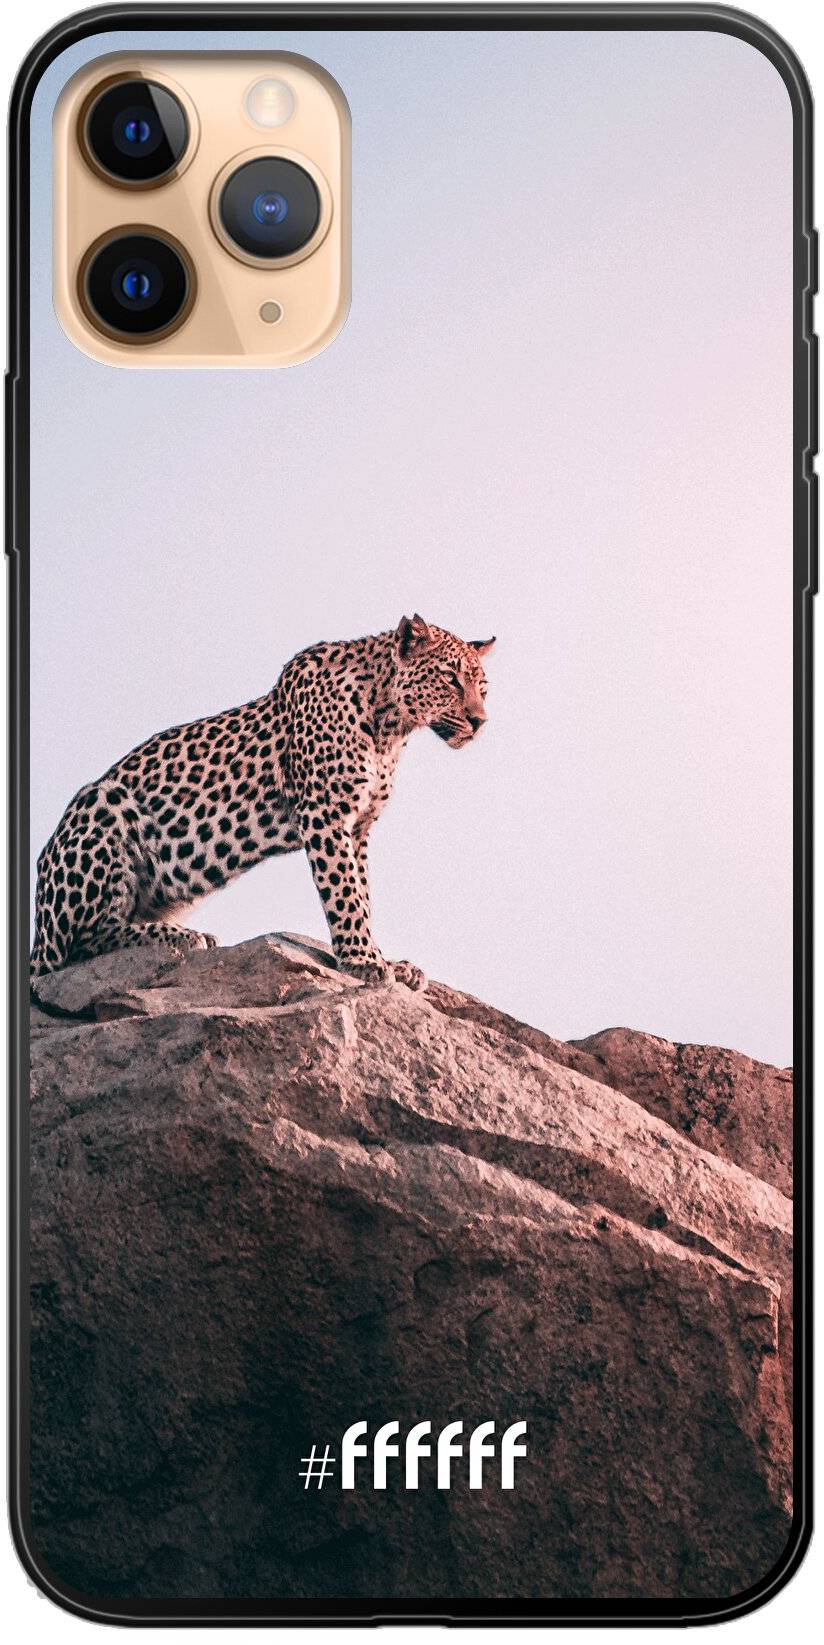 Leopard iPhone 11 Pro Max